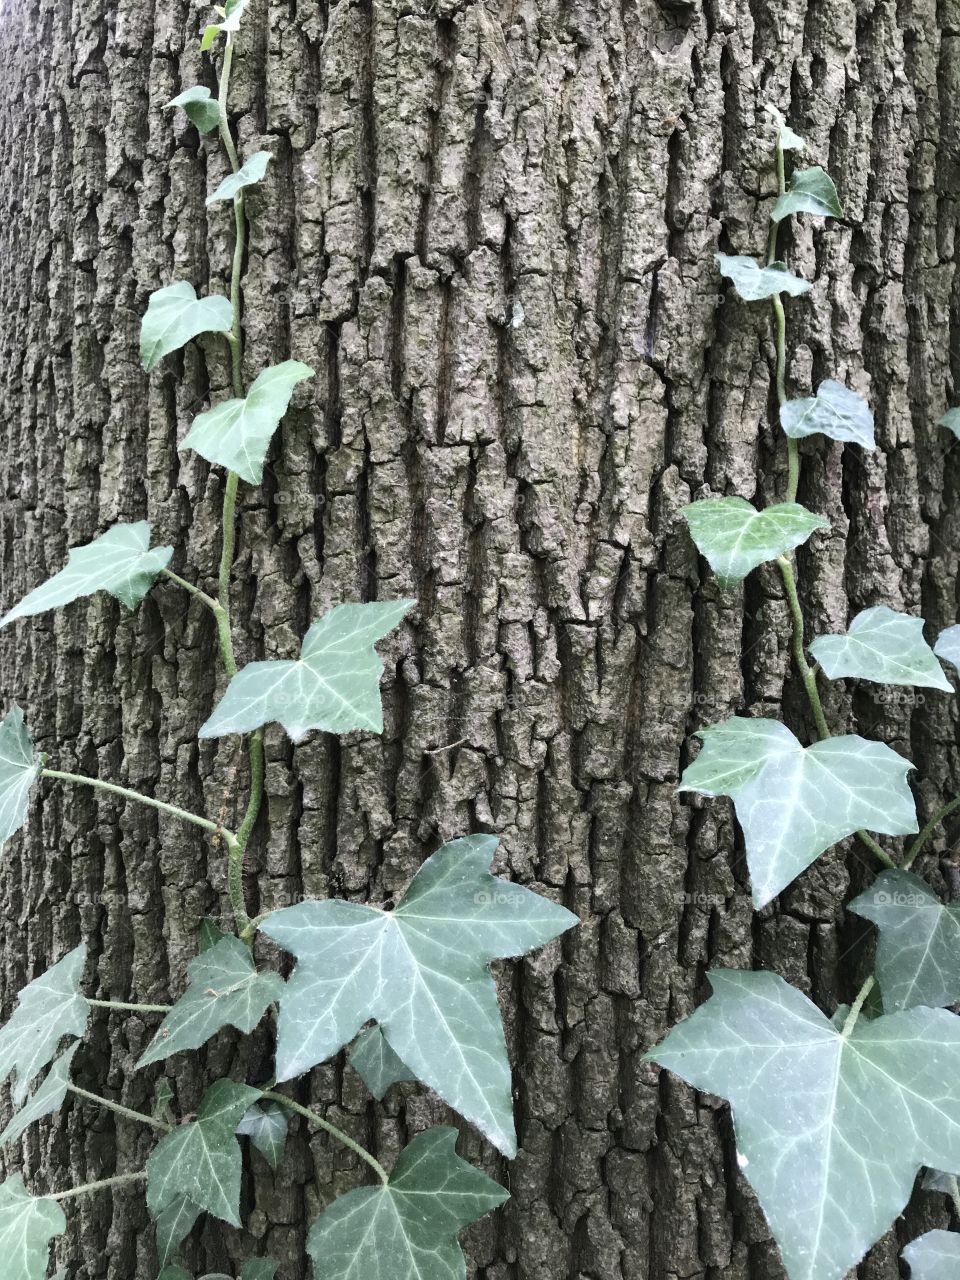 Ivy climbing the tree